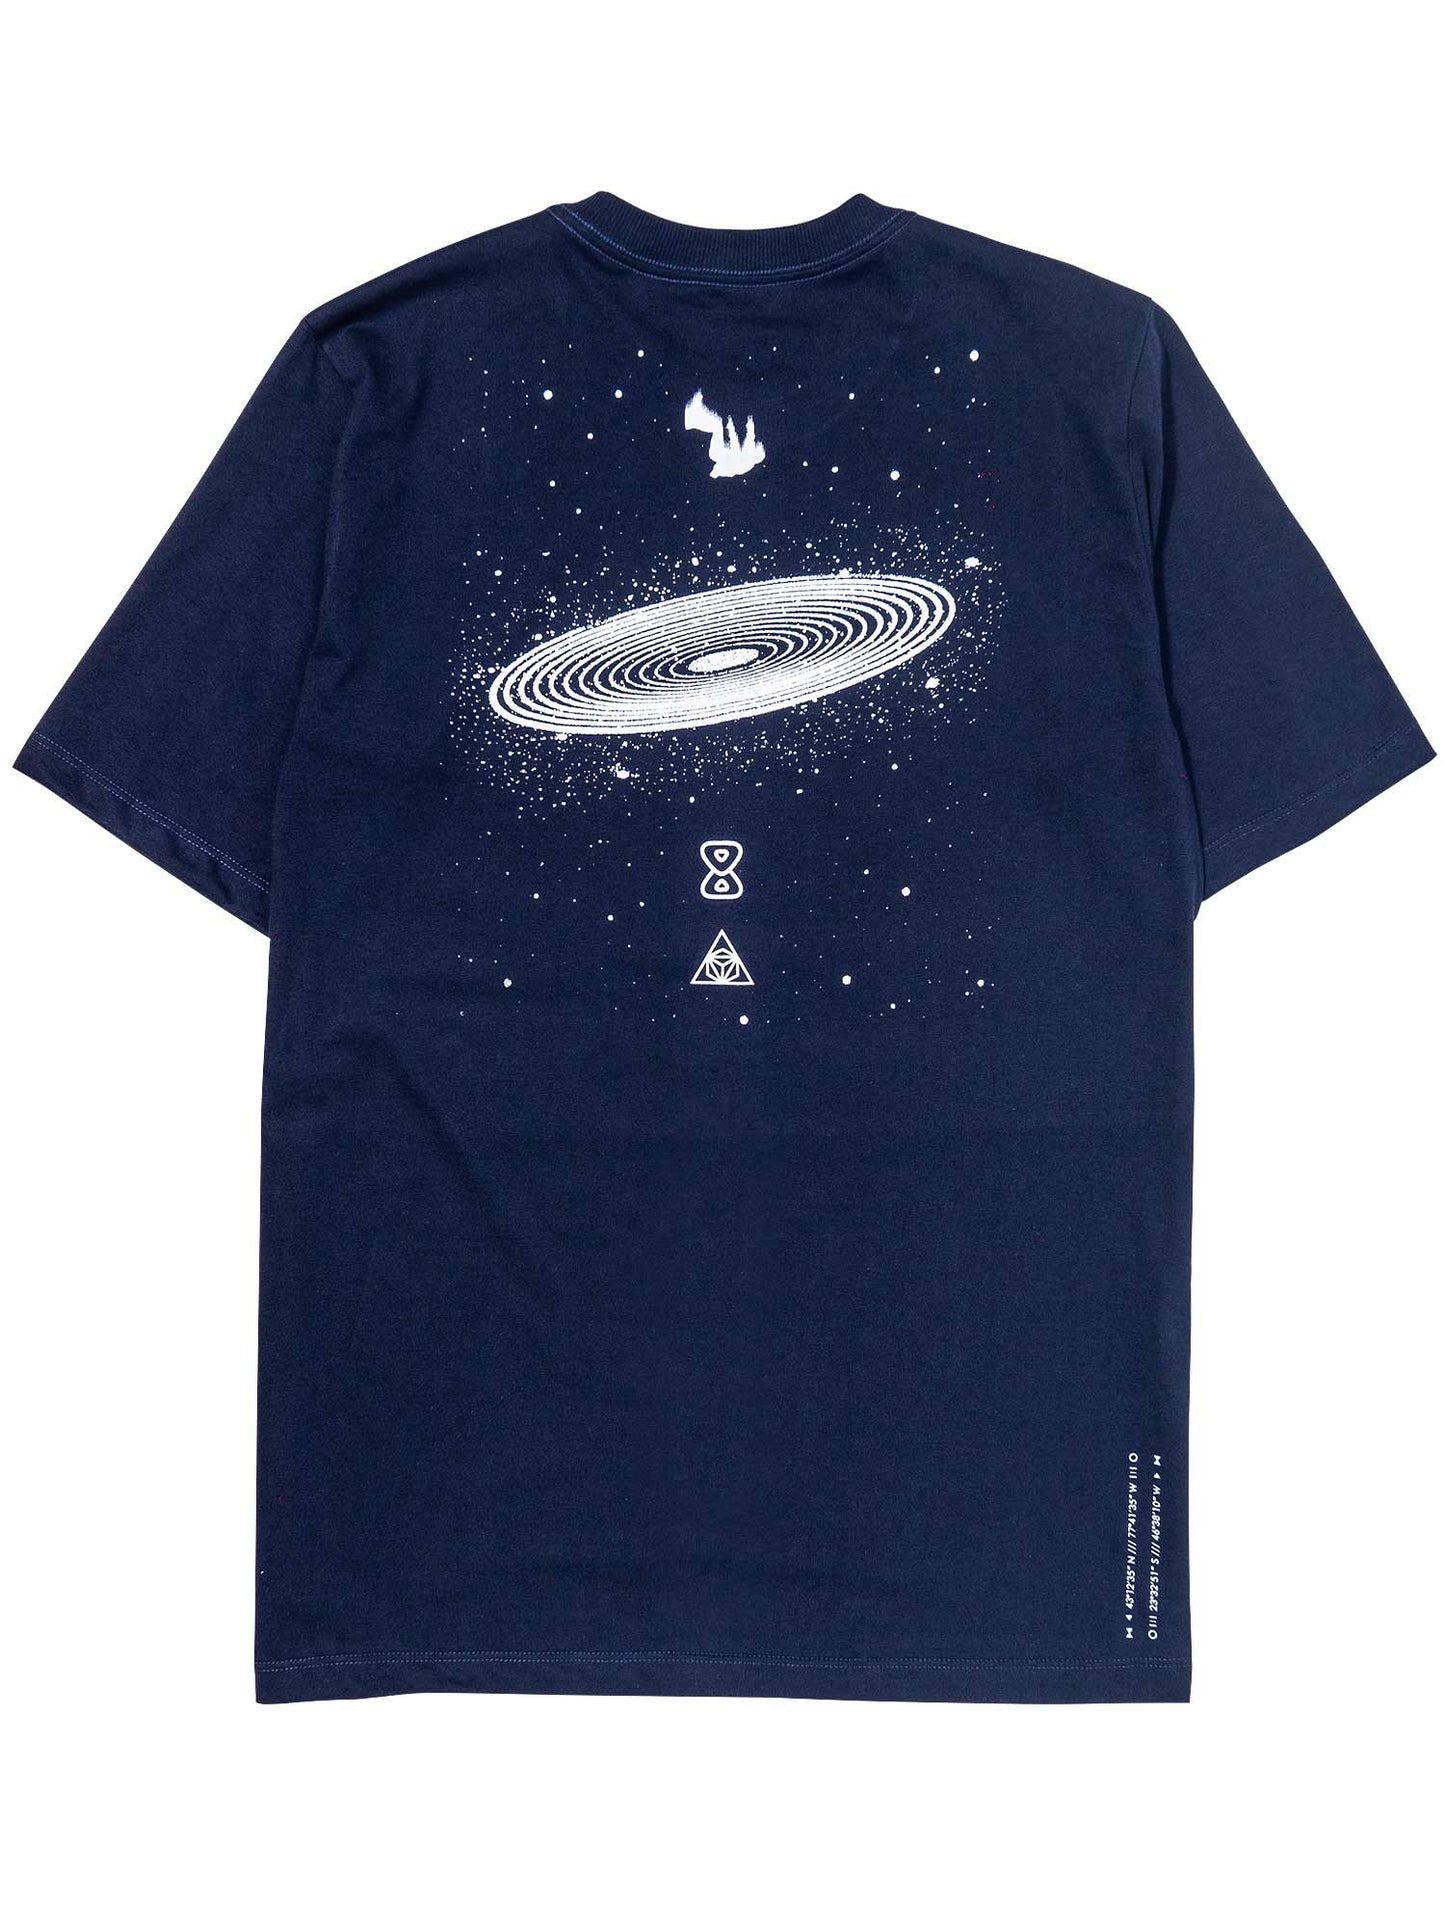 Camiseta-Future-Mycrocosmos-Azul-Marinho-Costas